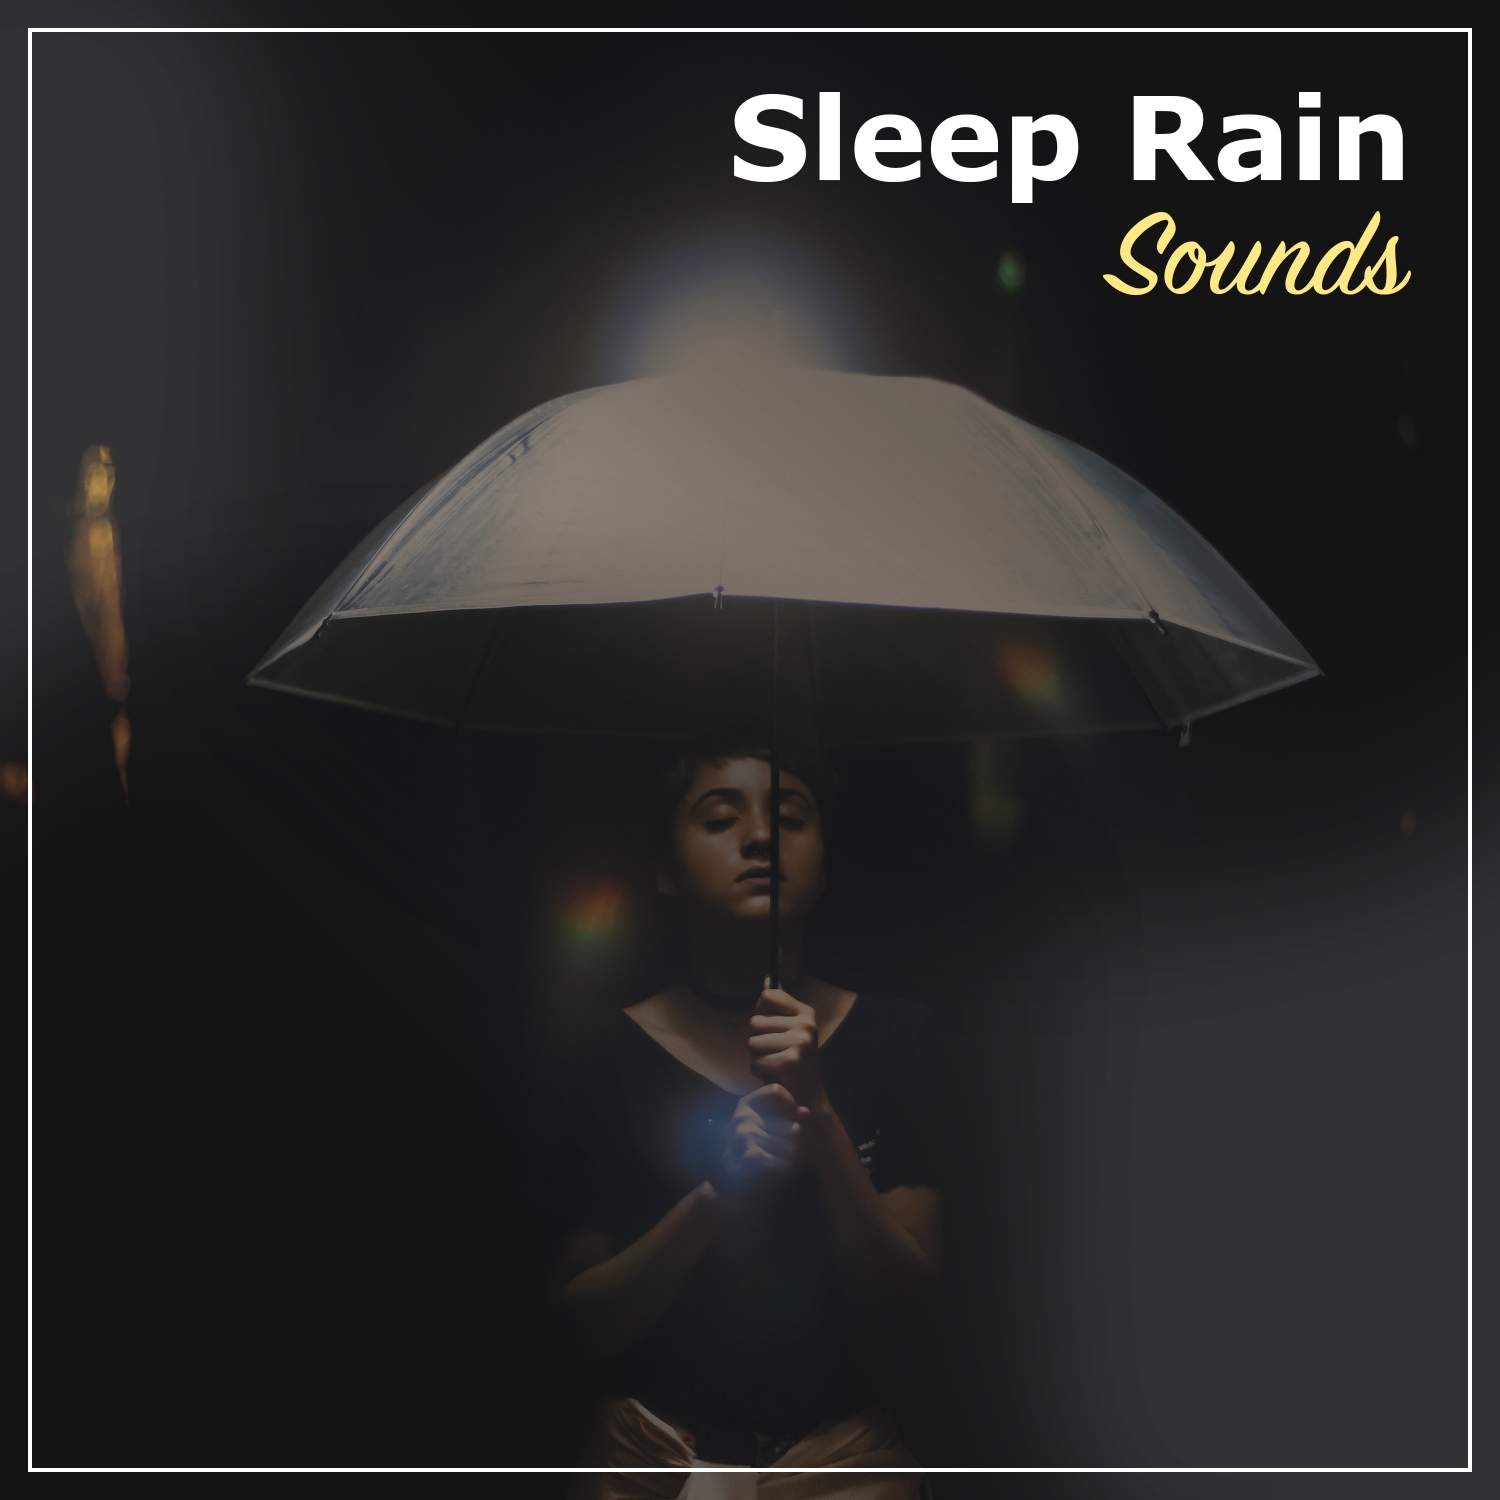 18 Sleep Rain Sounds for Spa Relaxation